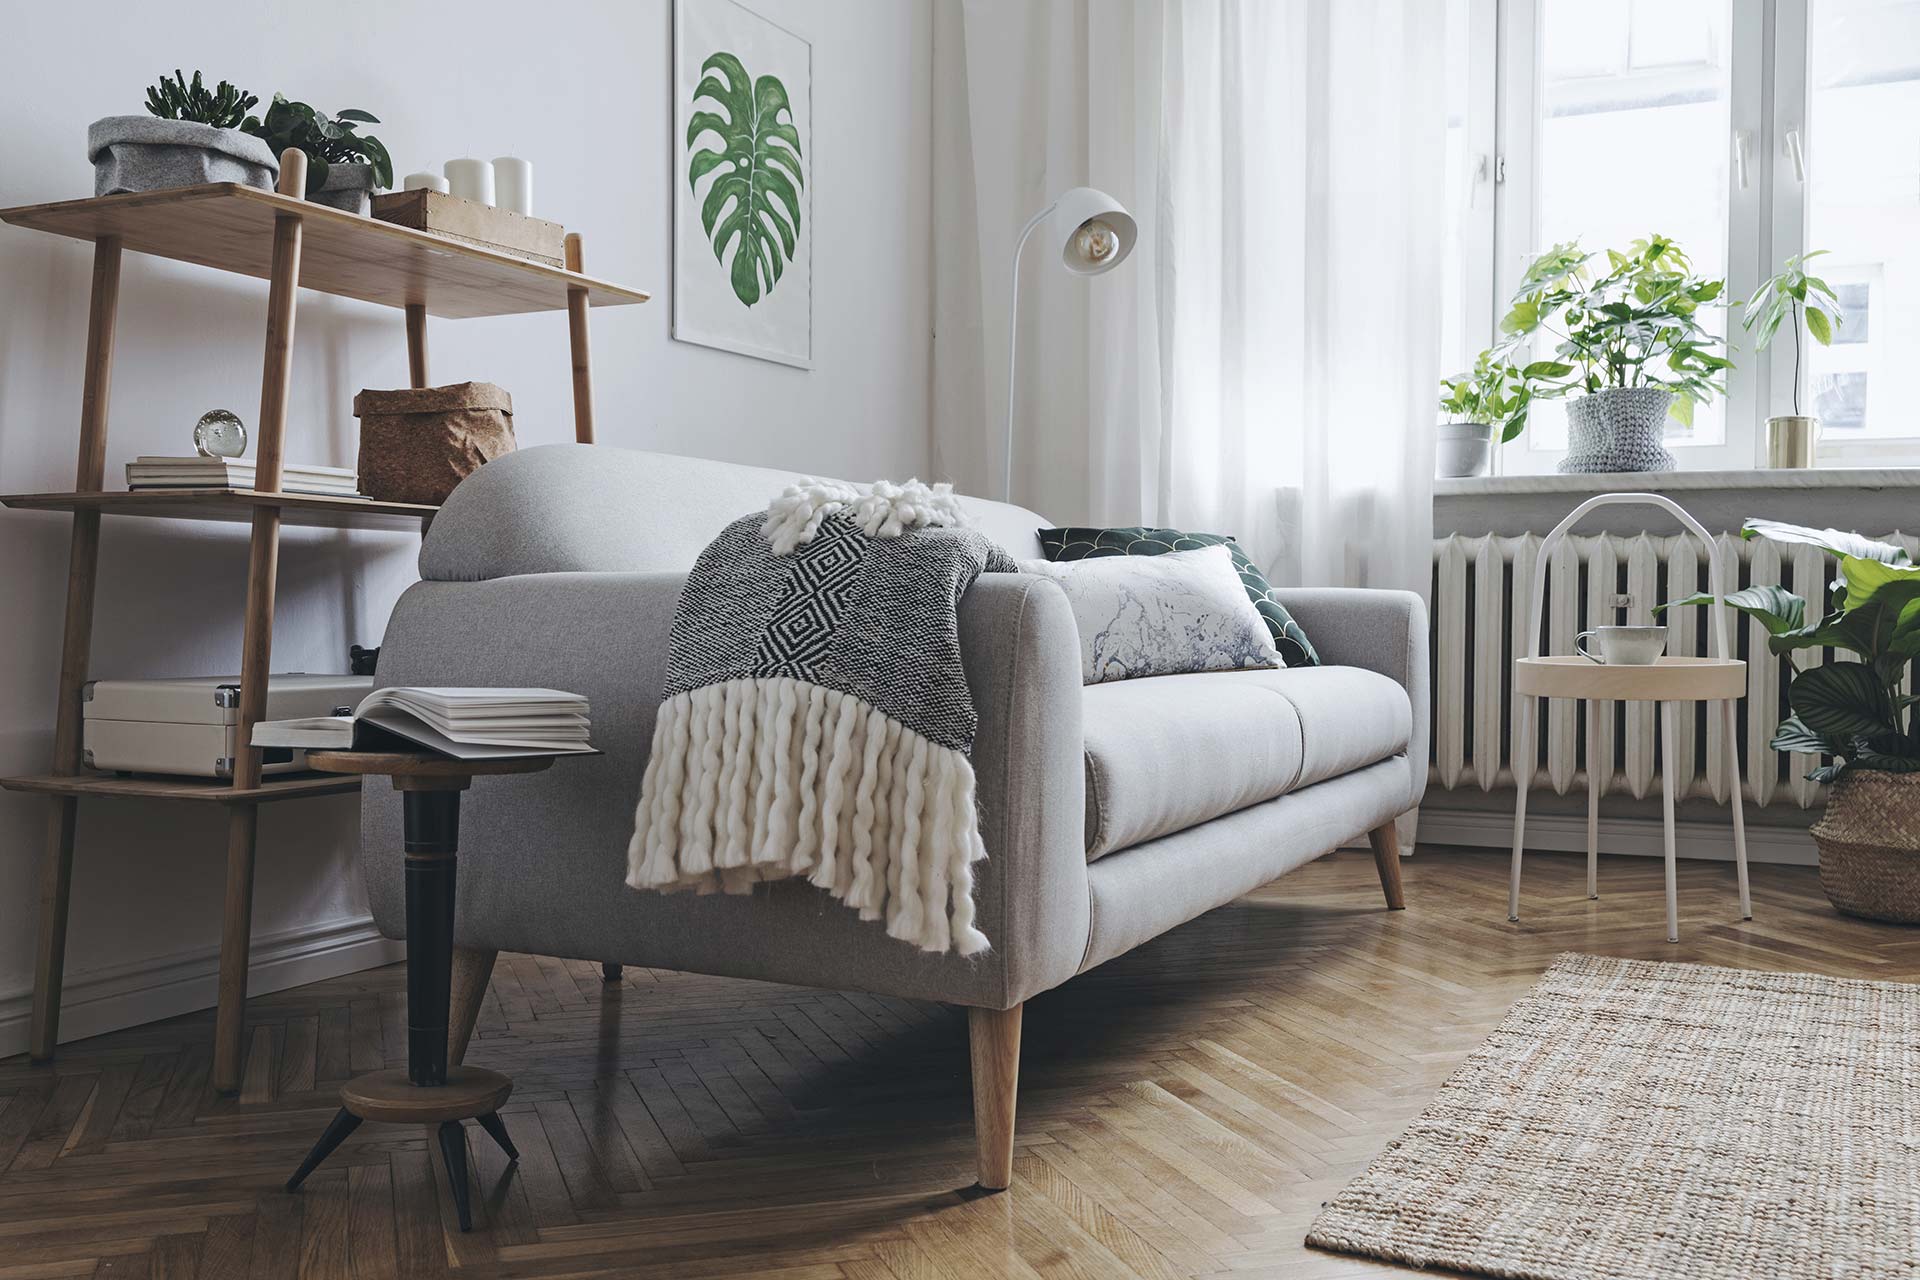 Bodenbelag - skandinavisch eingerichtetes Zimmer mit Holzparkett